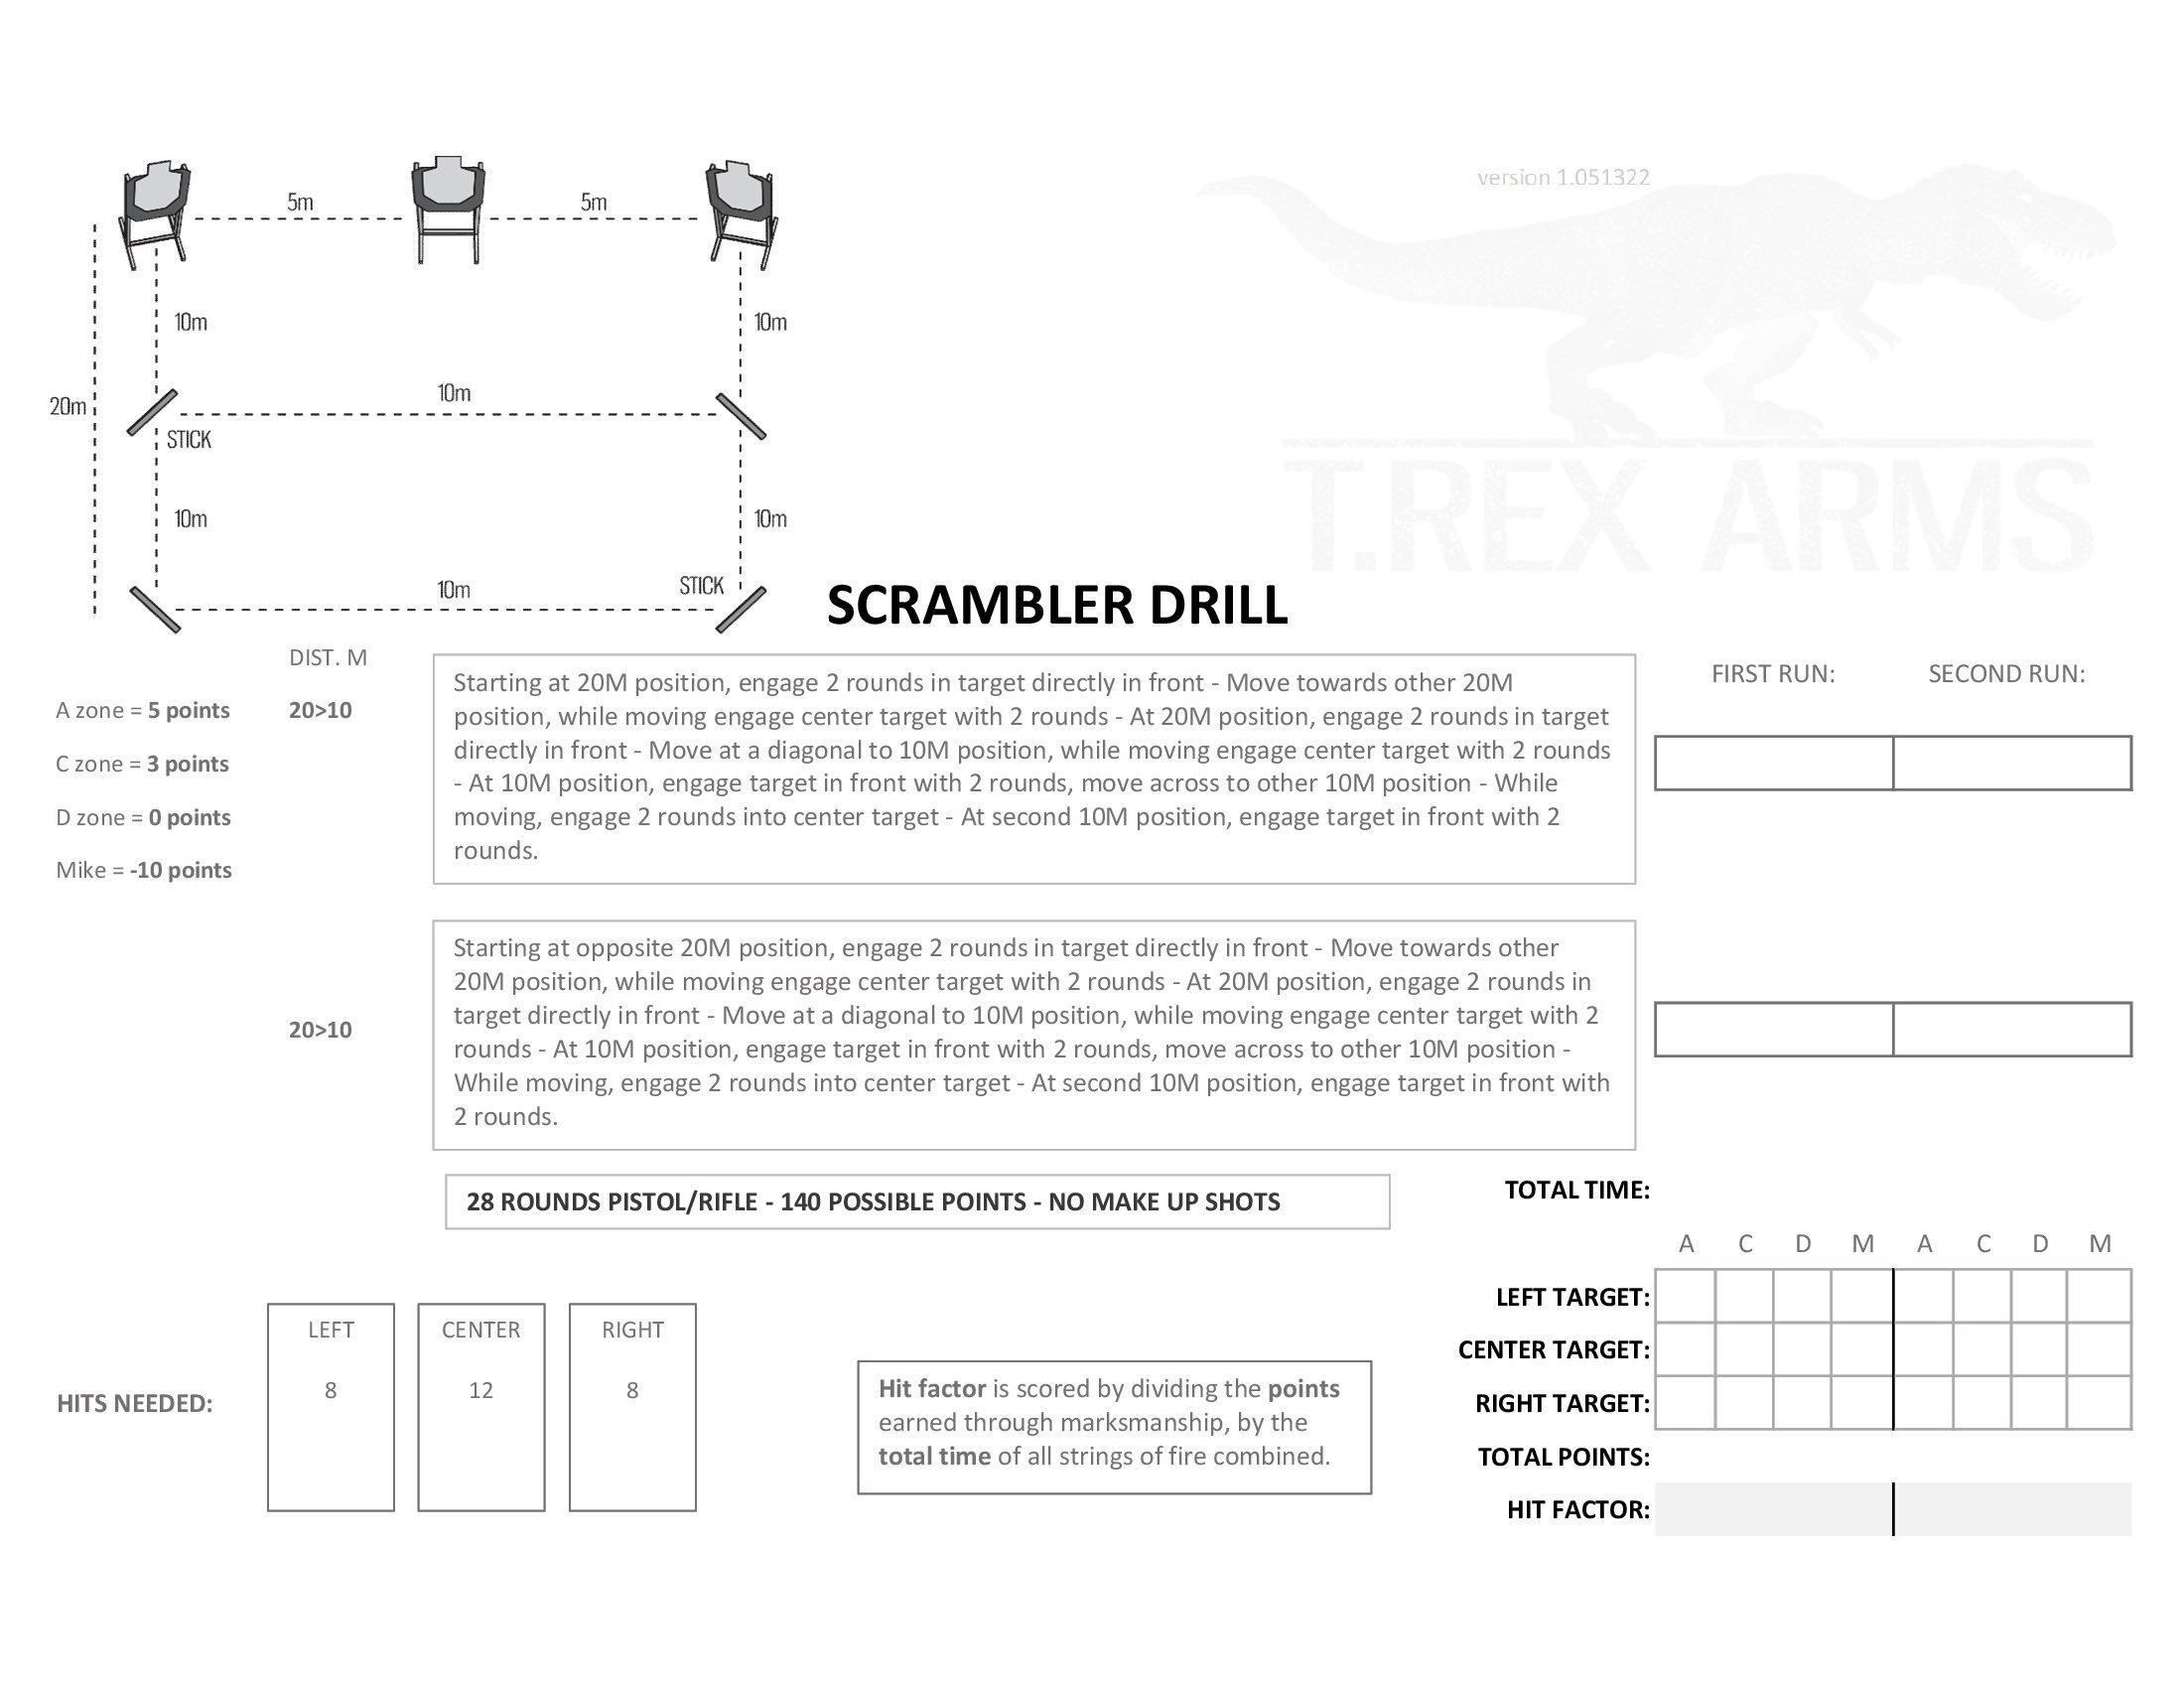 Scrambler Drill print-out